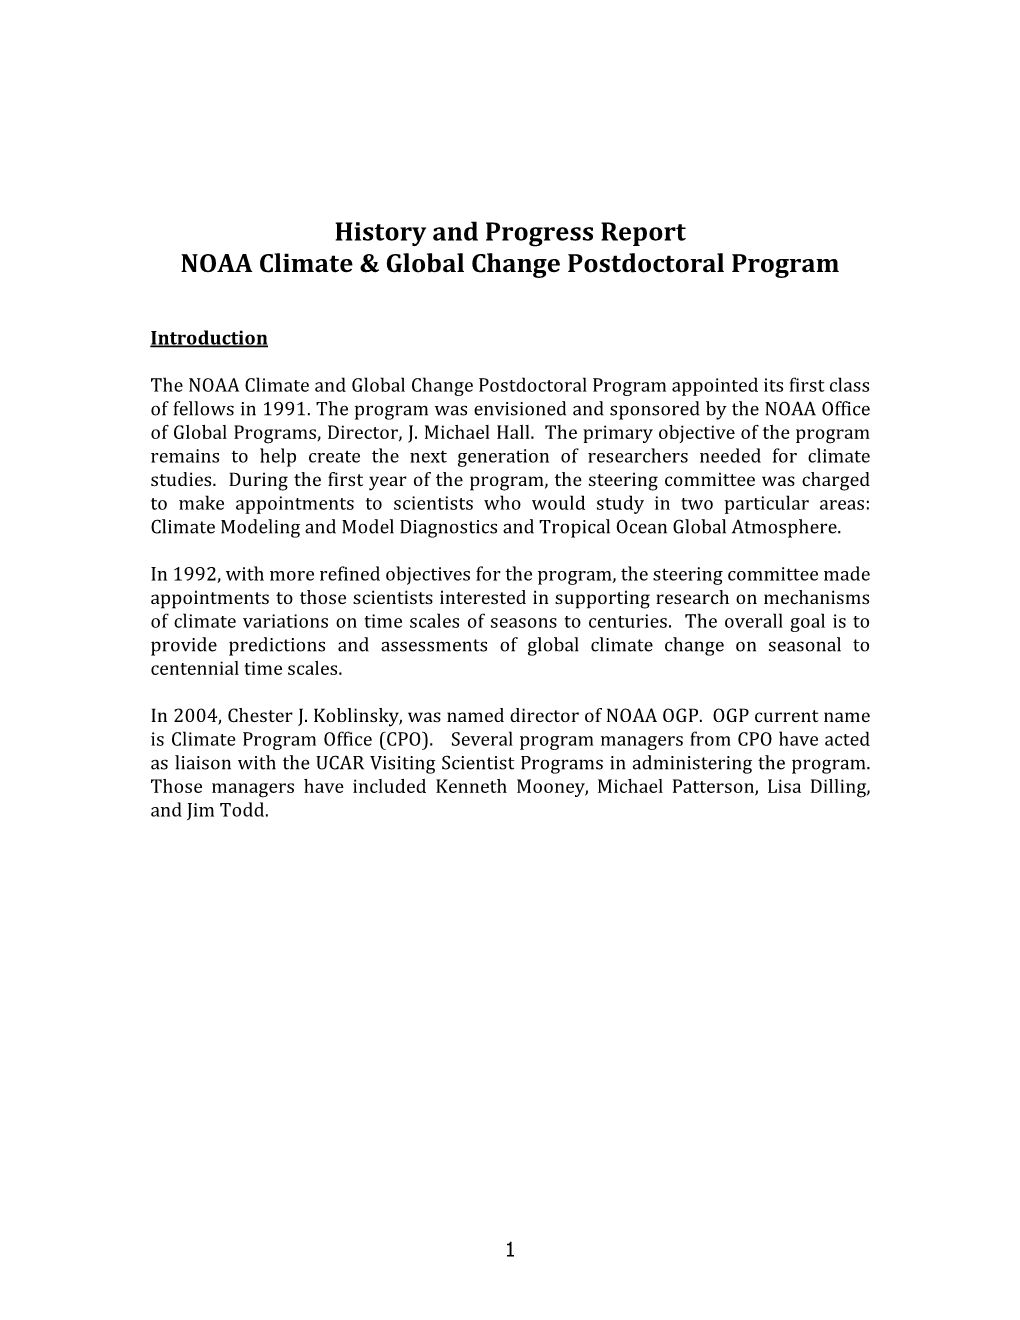 History and Progress Report NOAA Climate & Global Change